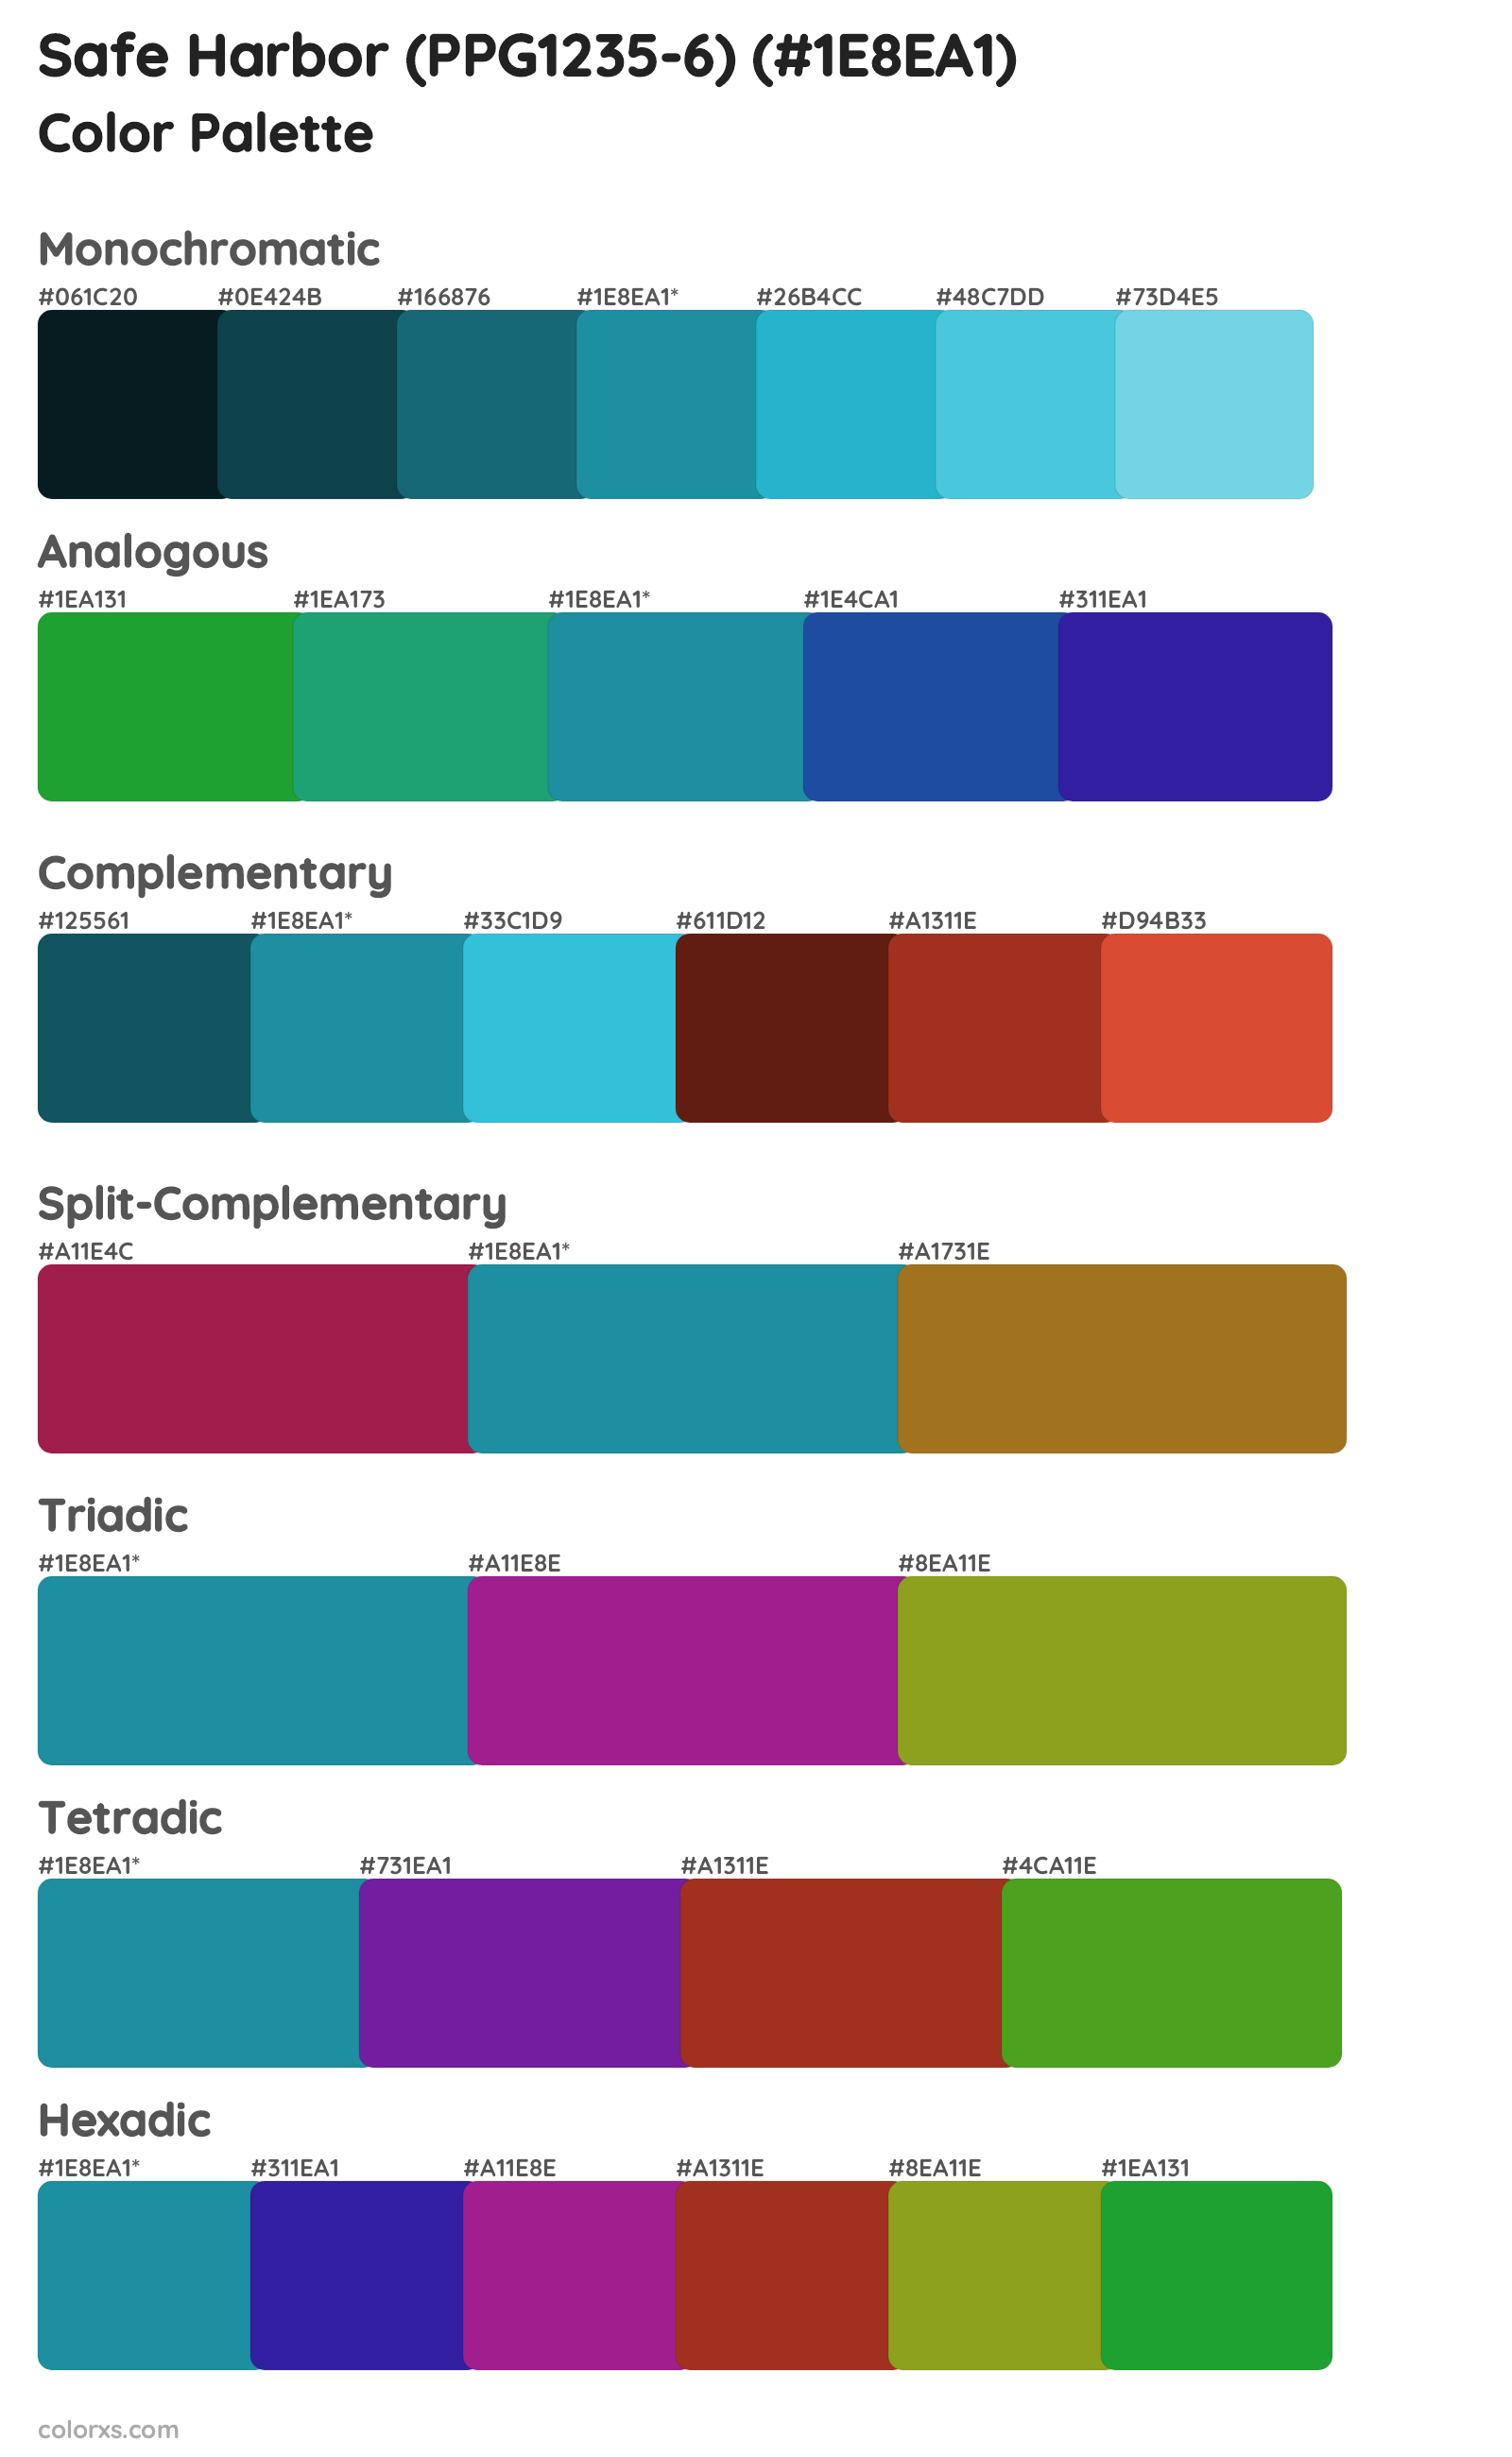 Safe Harbor (PPG1235-6) Color Scheme Palettes